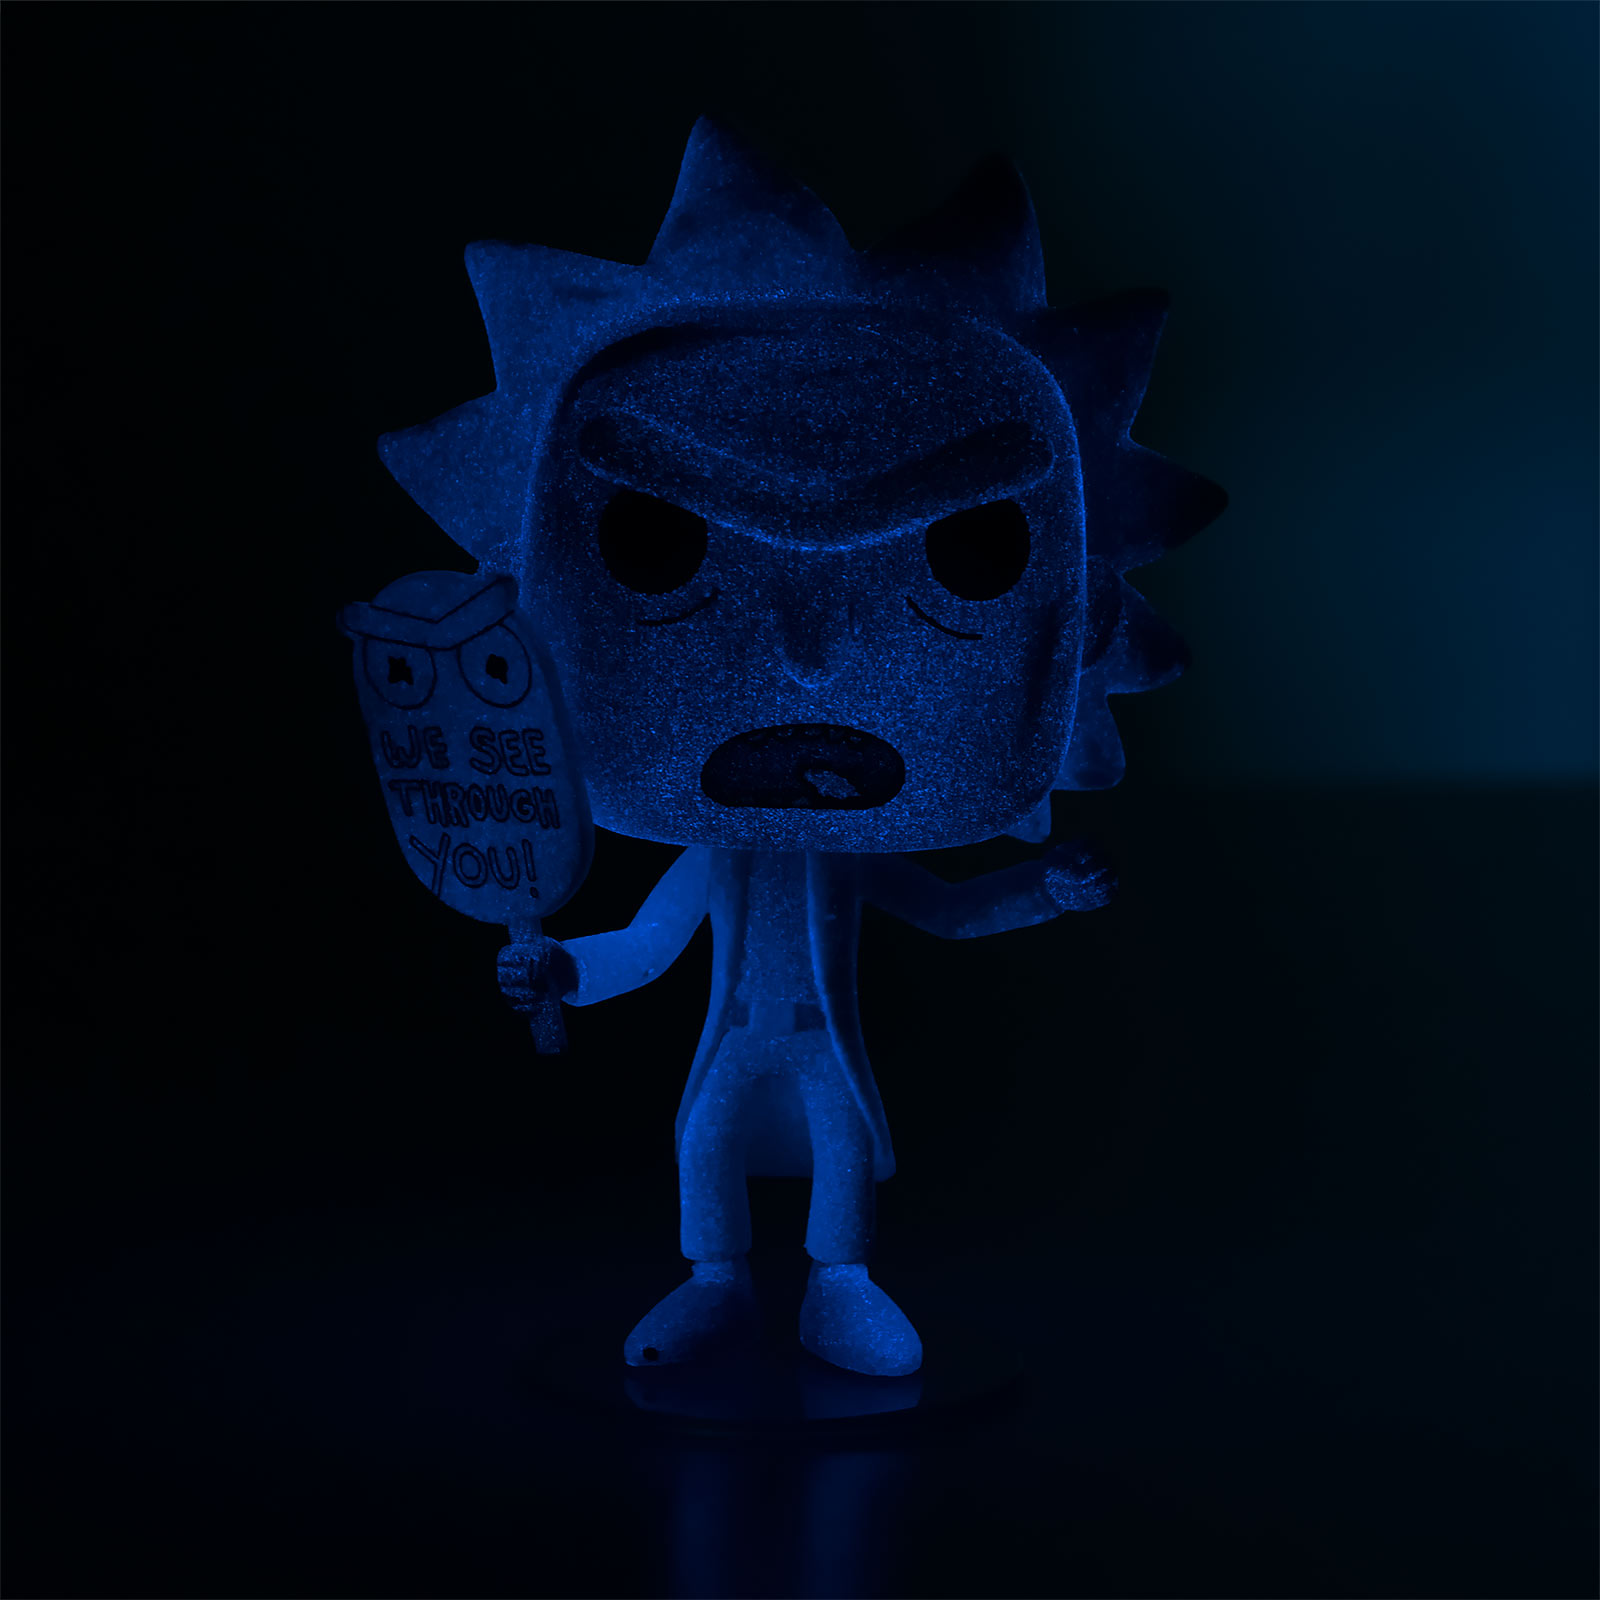 Rick and Morty - Rick Glow in the Dark Funko Pop Figurine